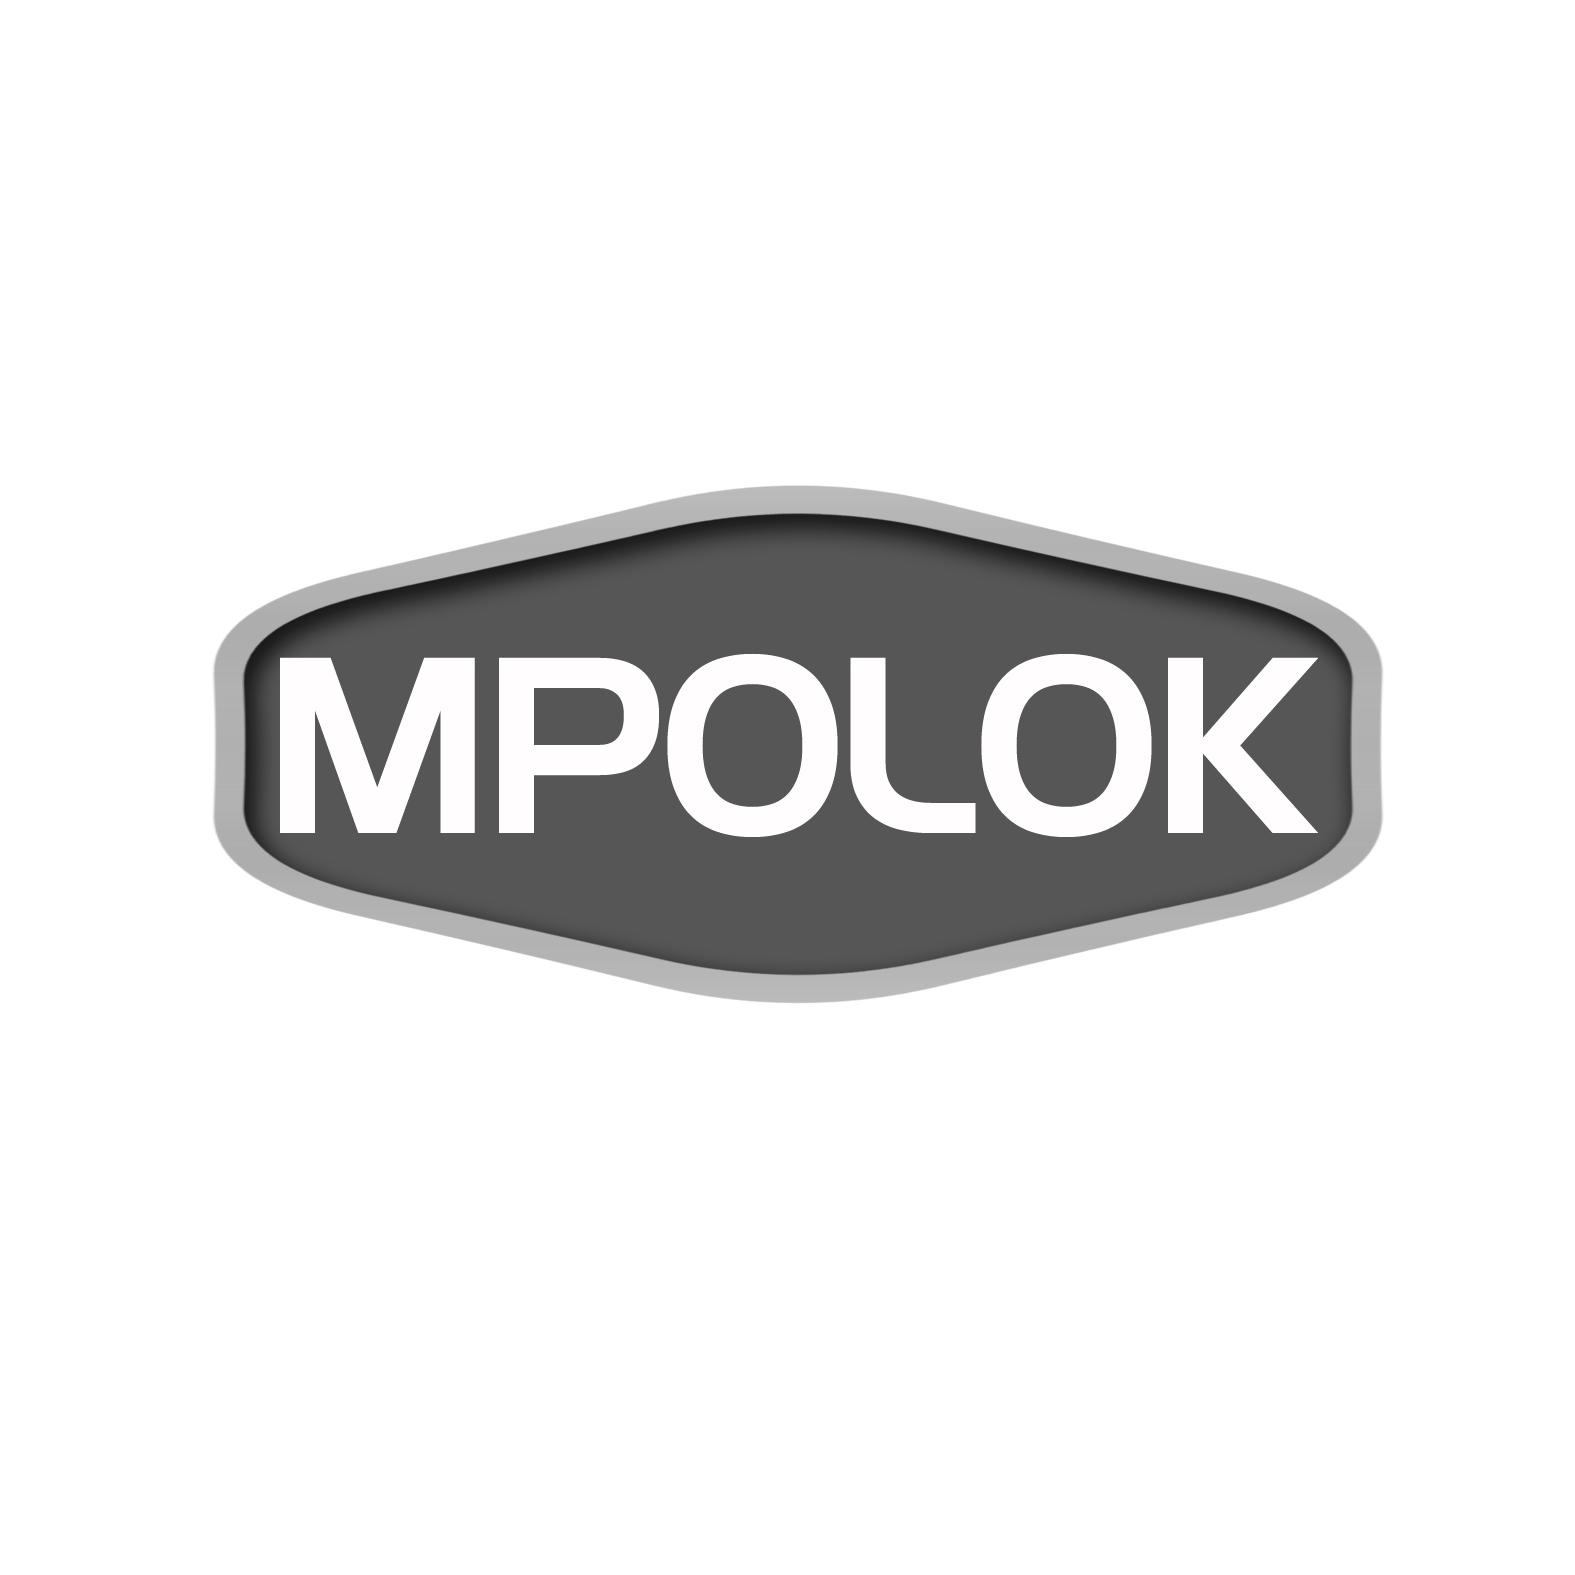 MPOLOK商标转让